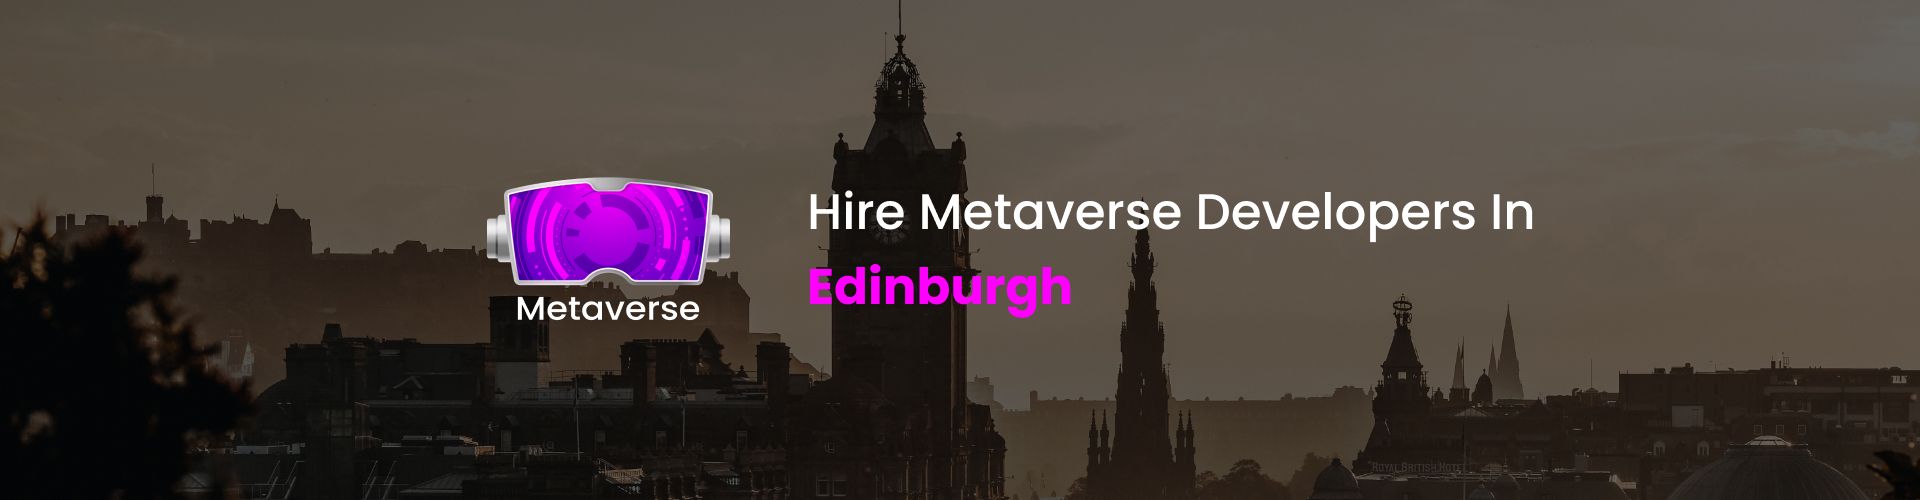 hire metaverse developers edinburgh